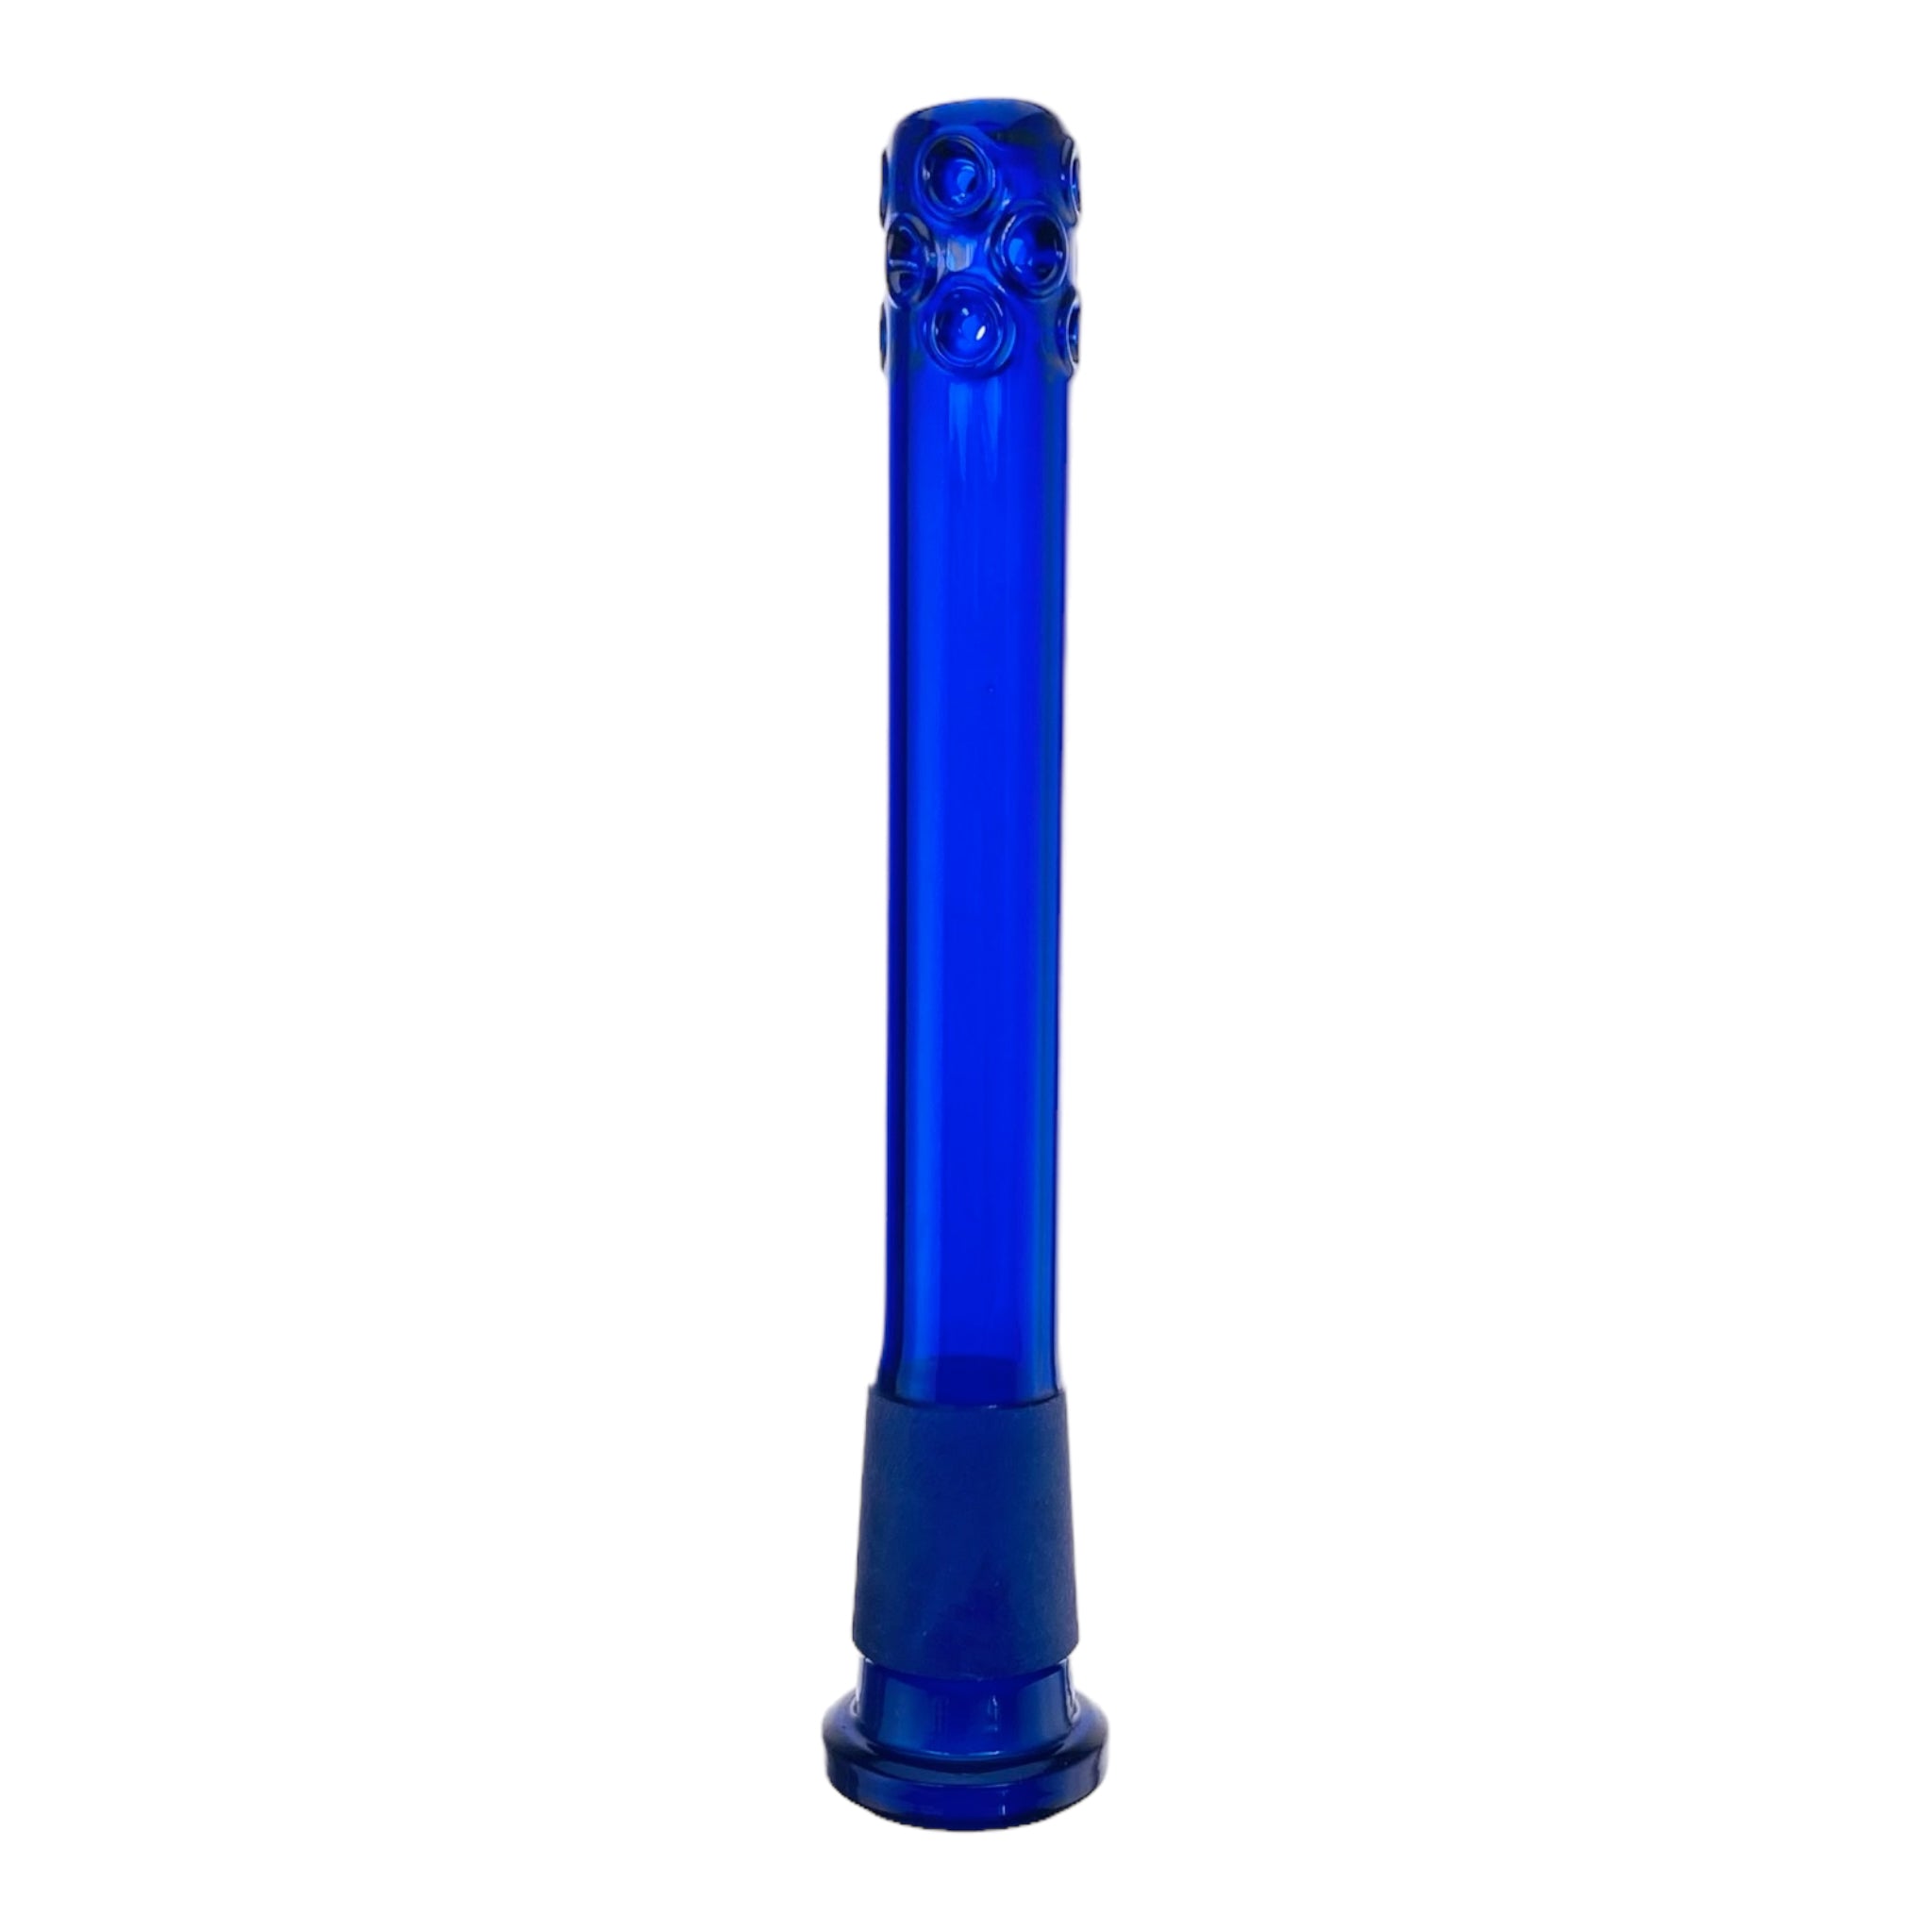 Blue 5 Inch 18mm - 14mm Downstem For Glass Bong